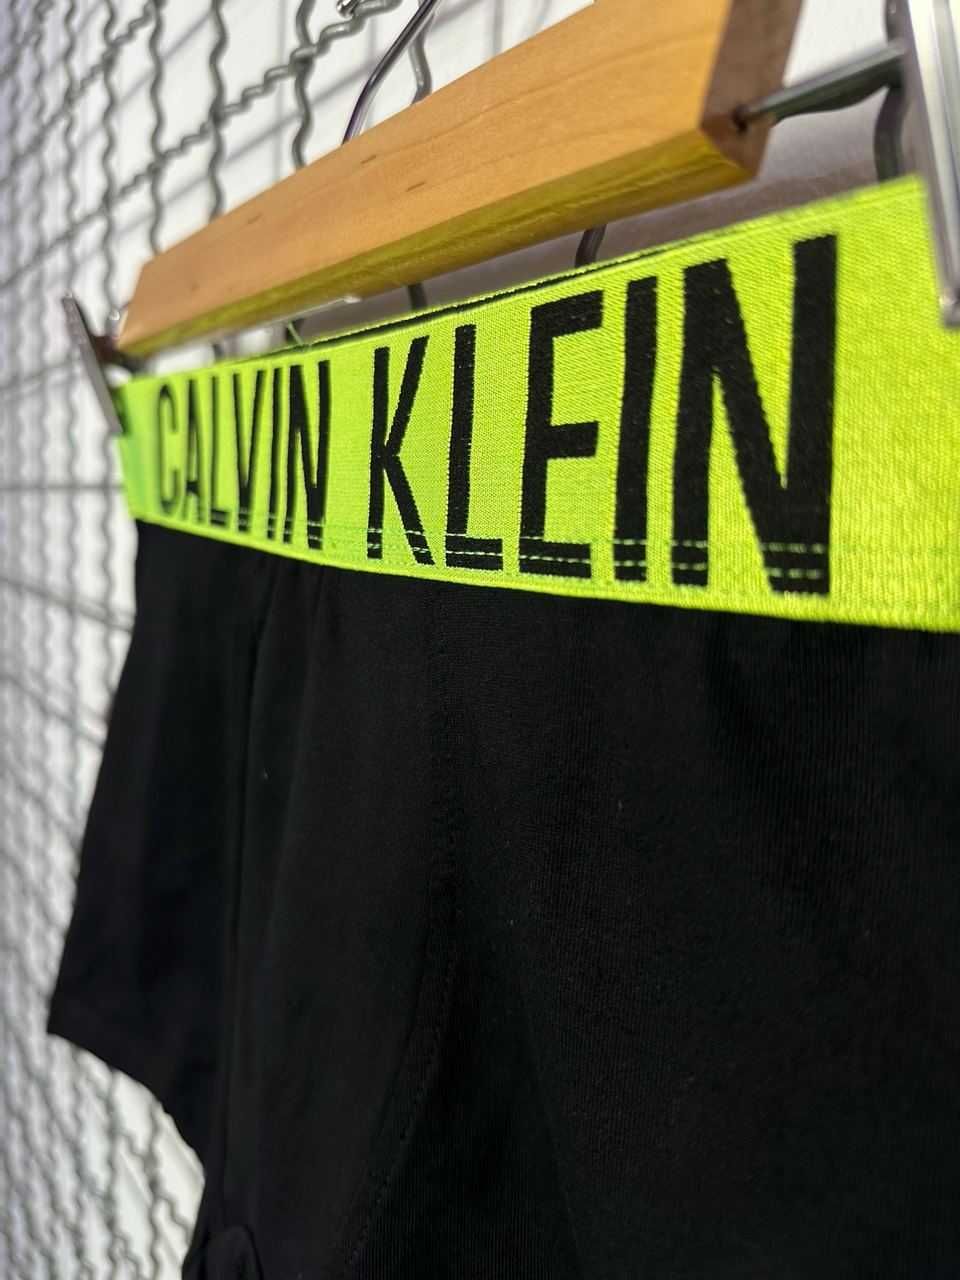 Труси чоловічі Calvin Klein / Трусы мужские кельвин кляйн 5 шт.